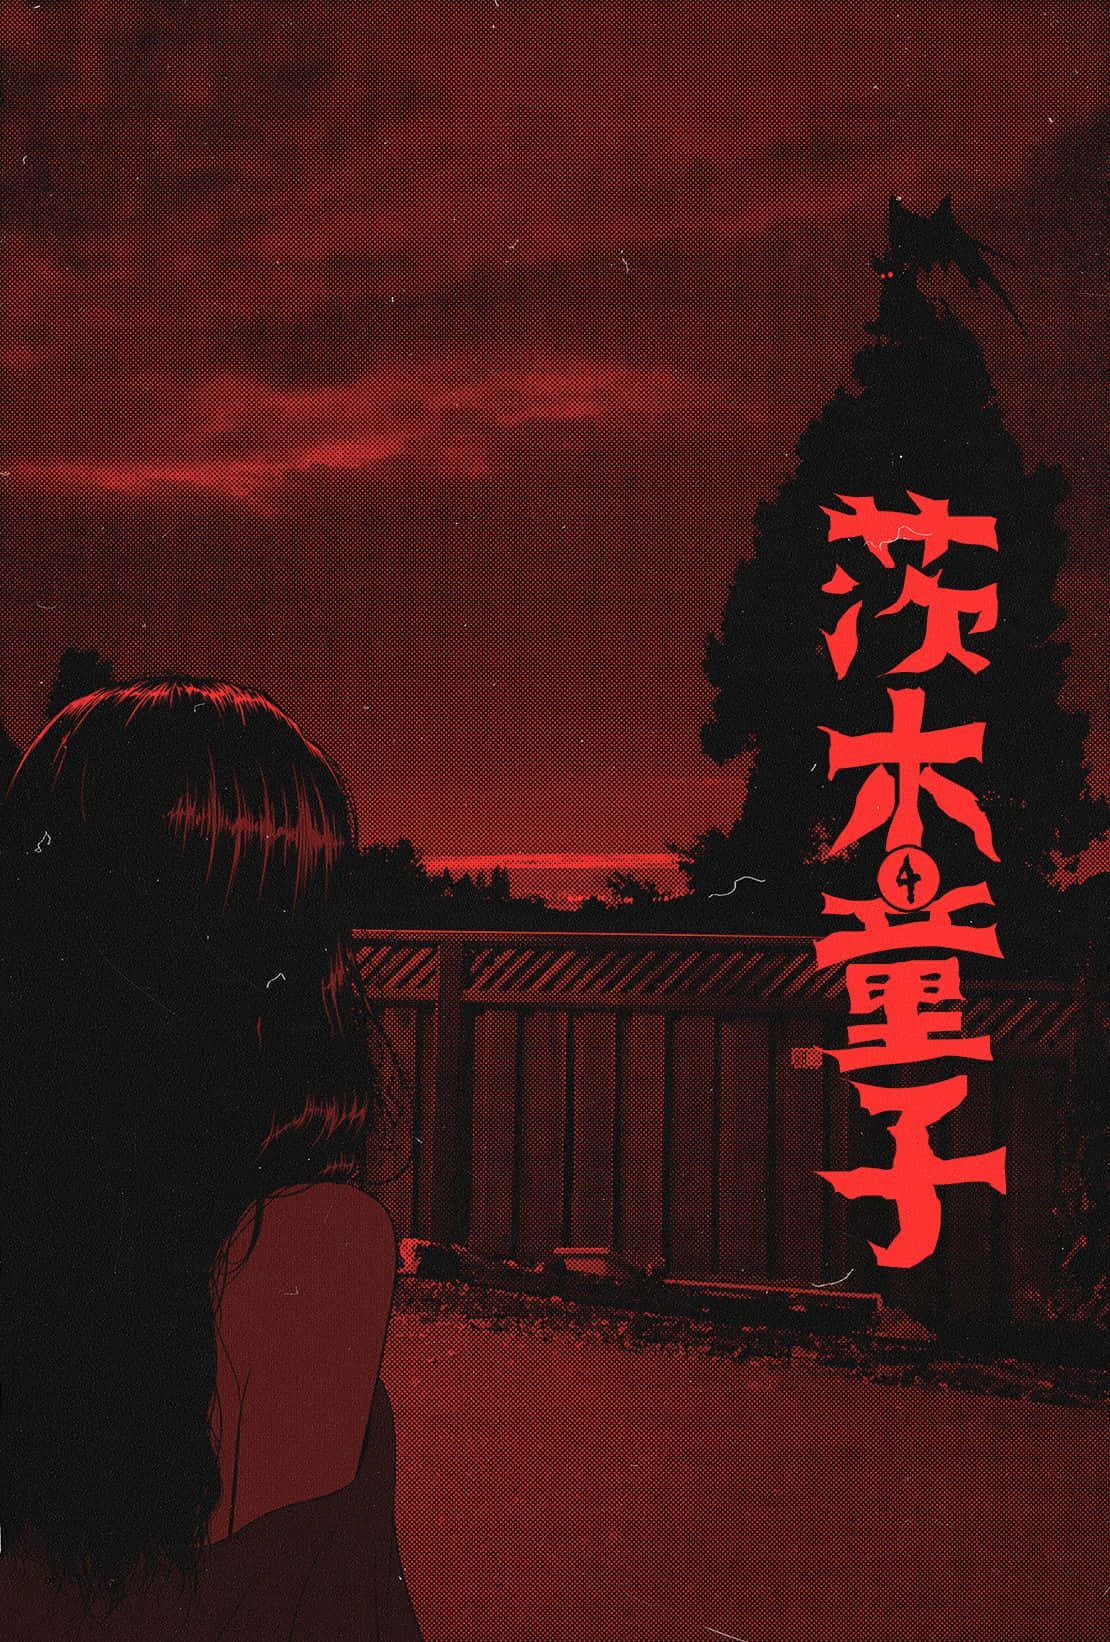 Nishiored Anime Aesthetic = Nishio Röd Anime-estetik Wallpaper